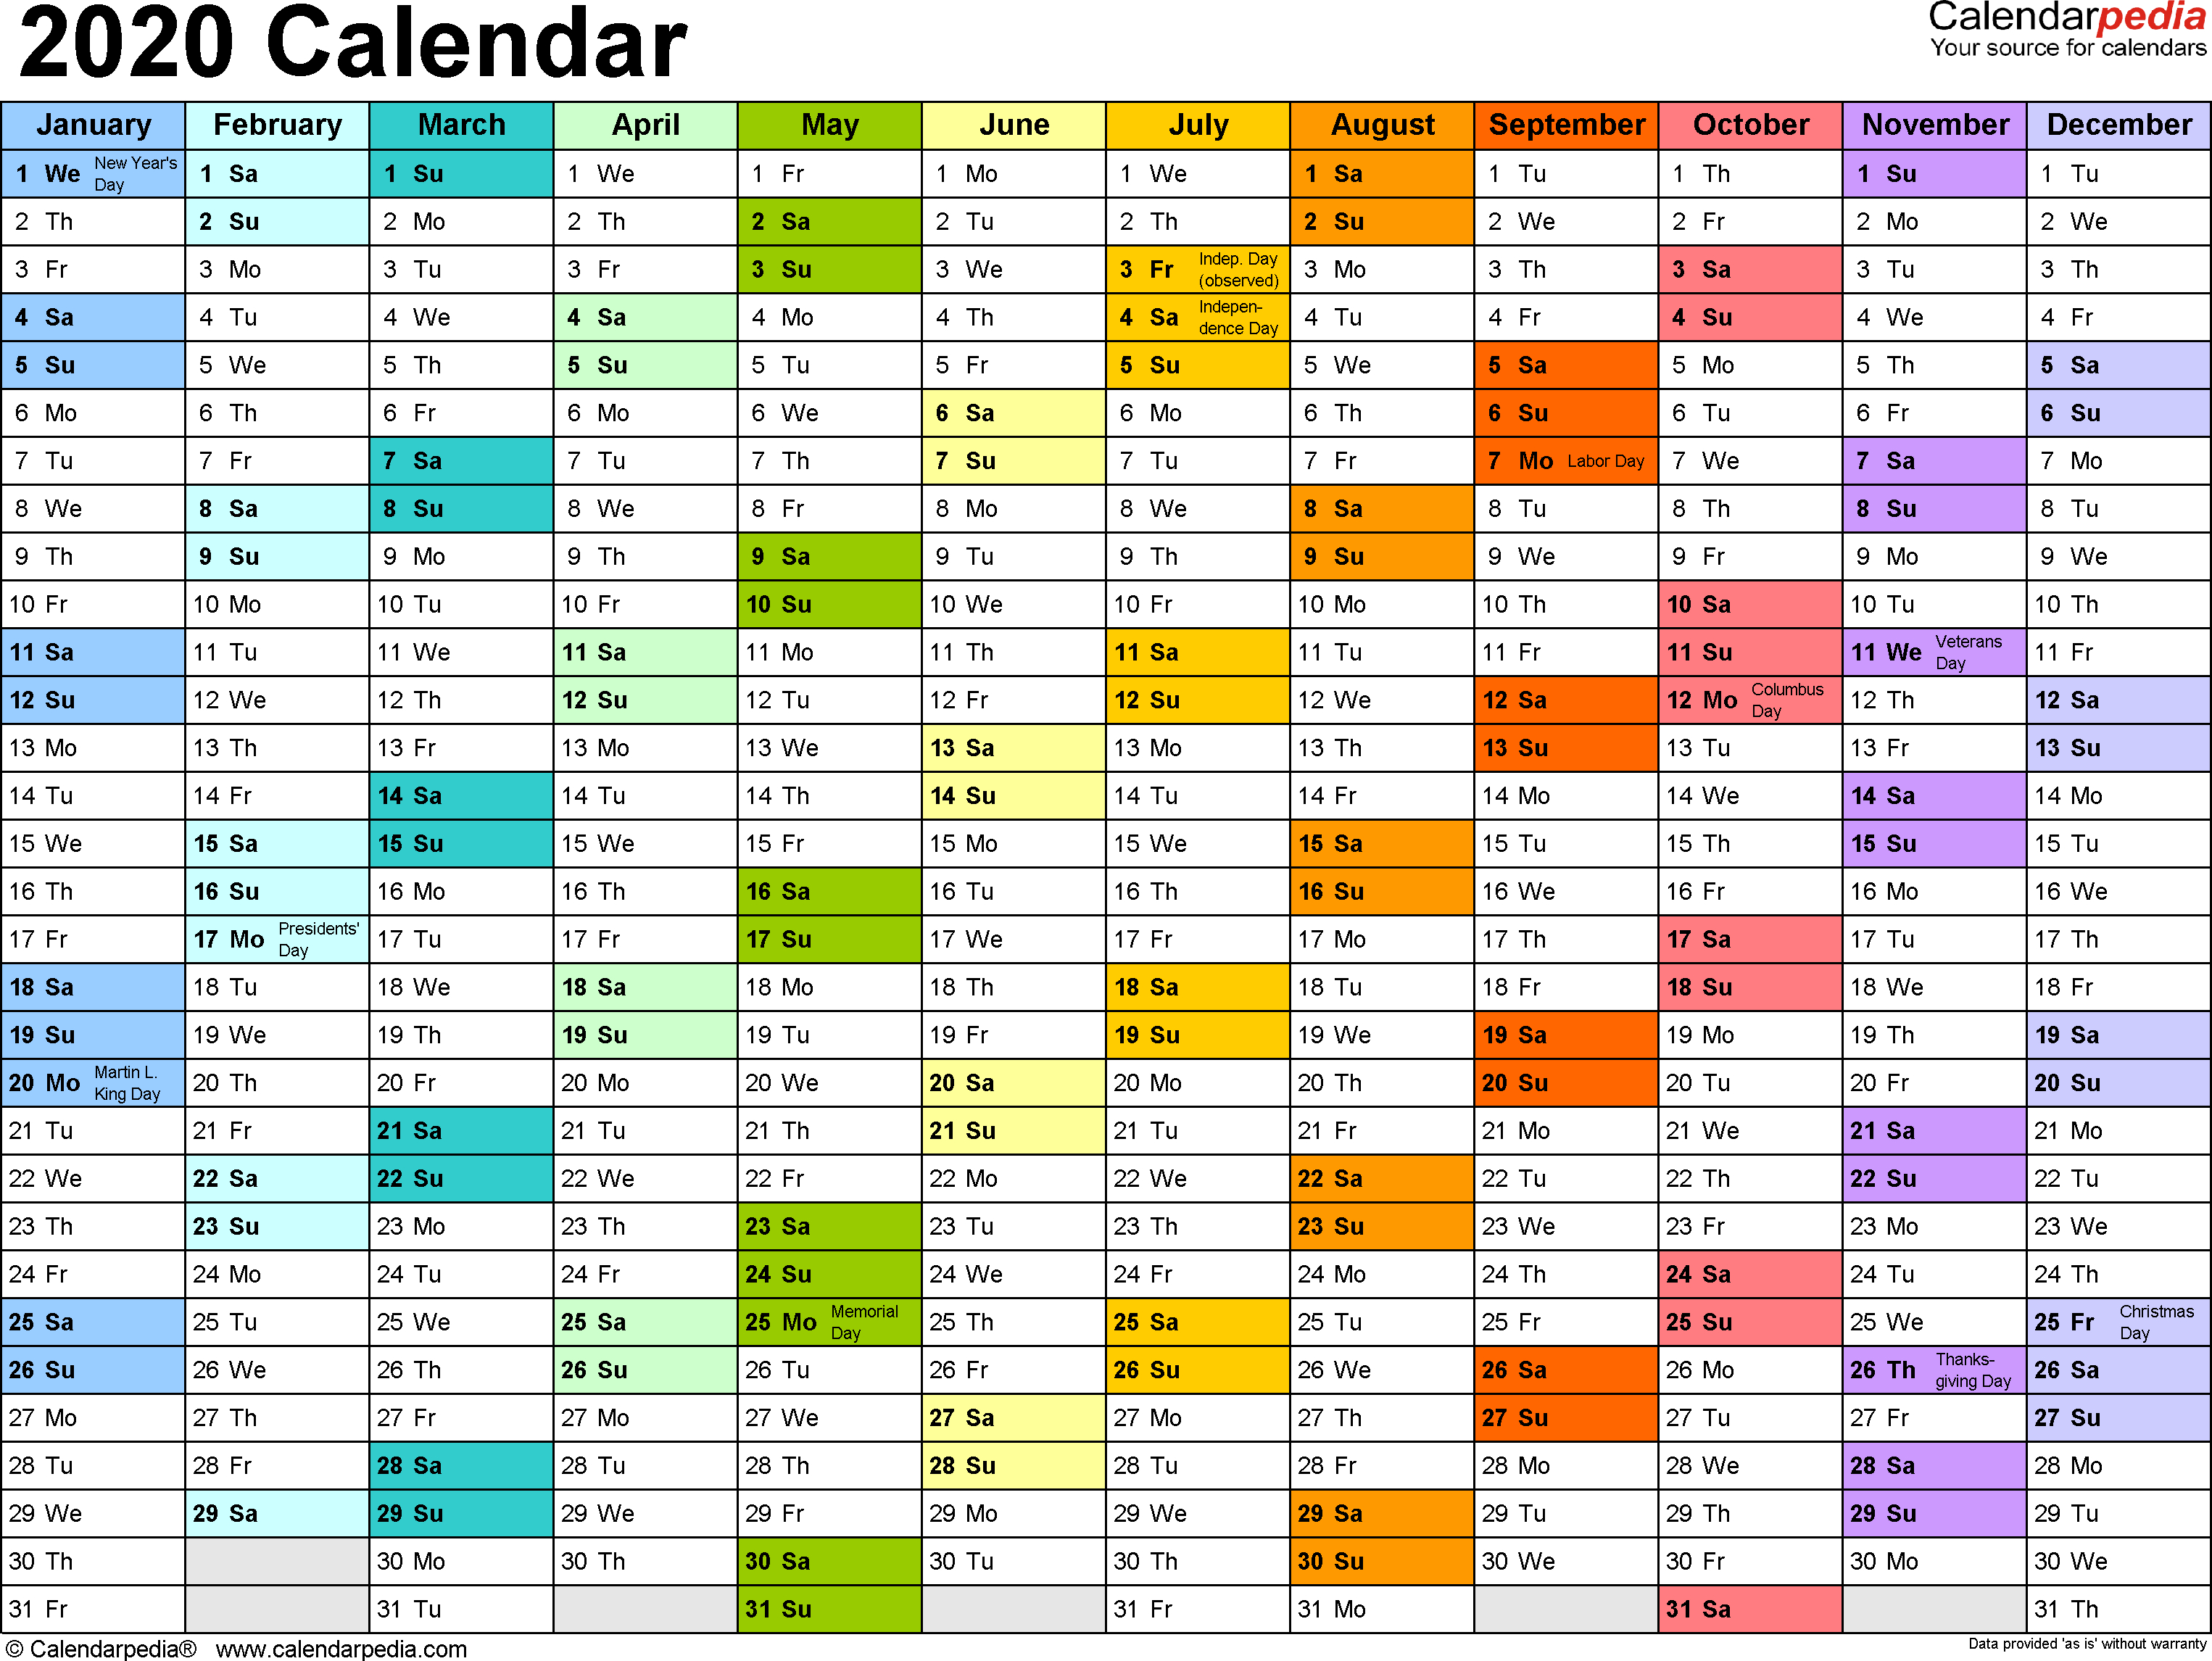 Calendarpedia 2020 Excel ⋆ Calendar For Planning